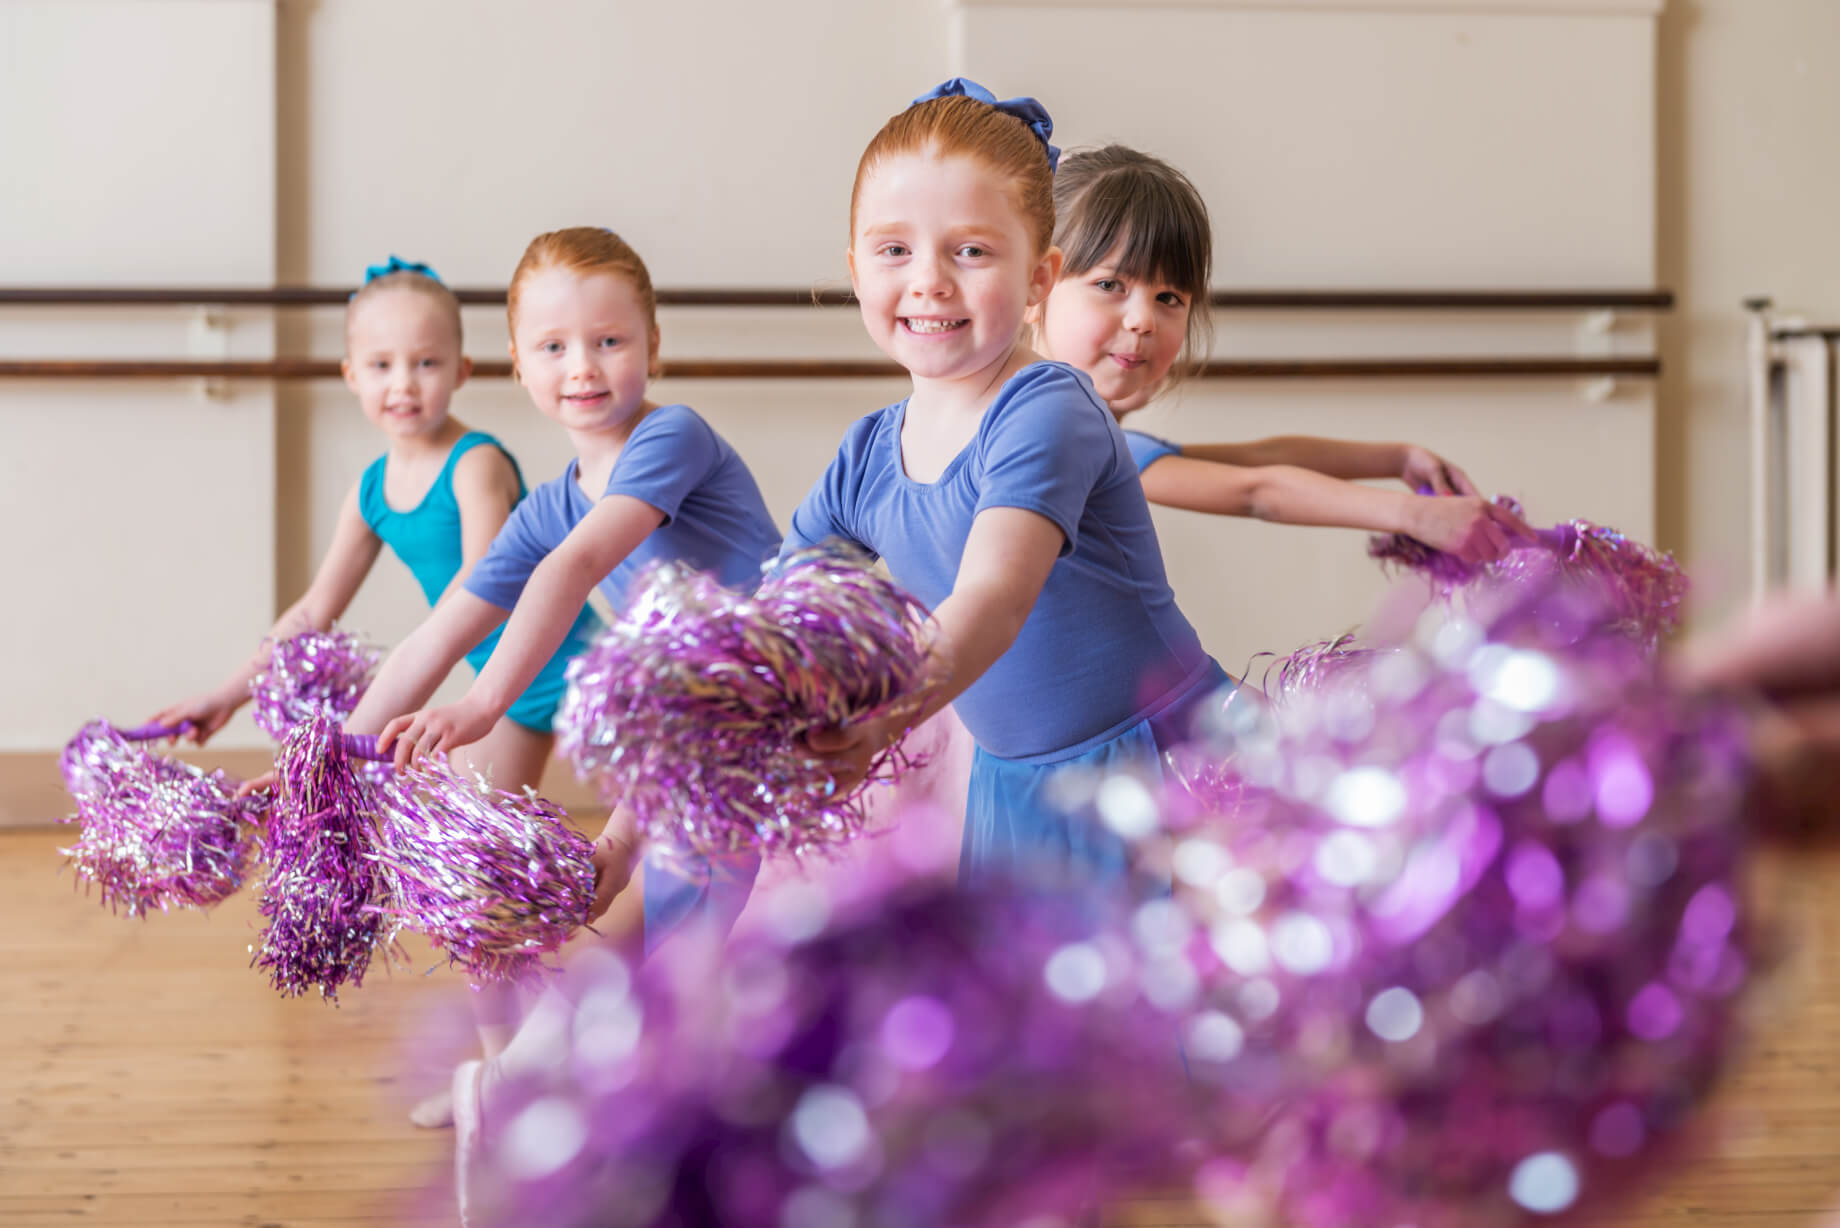 rnsd-rutleigh-norris-dance-school-young-girl-dancers-class-pom-poms-purple-blue.jpg